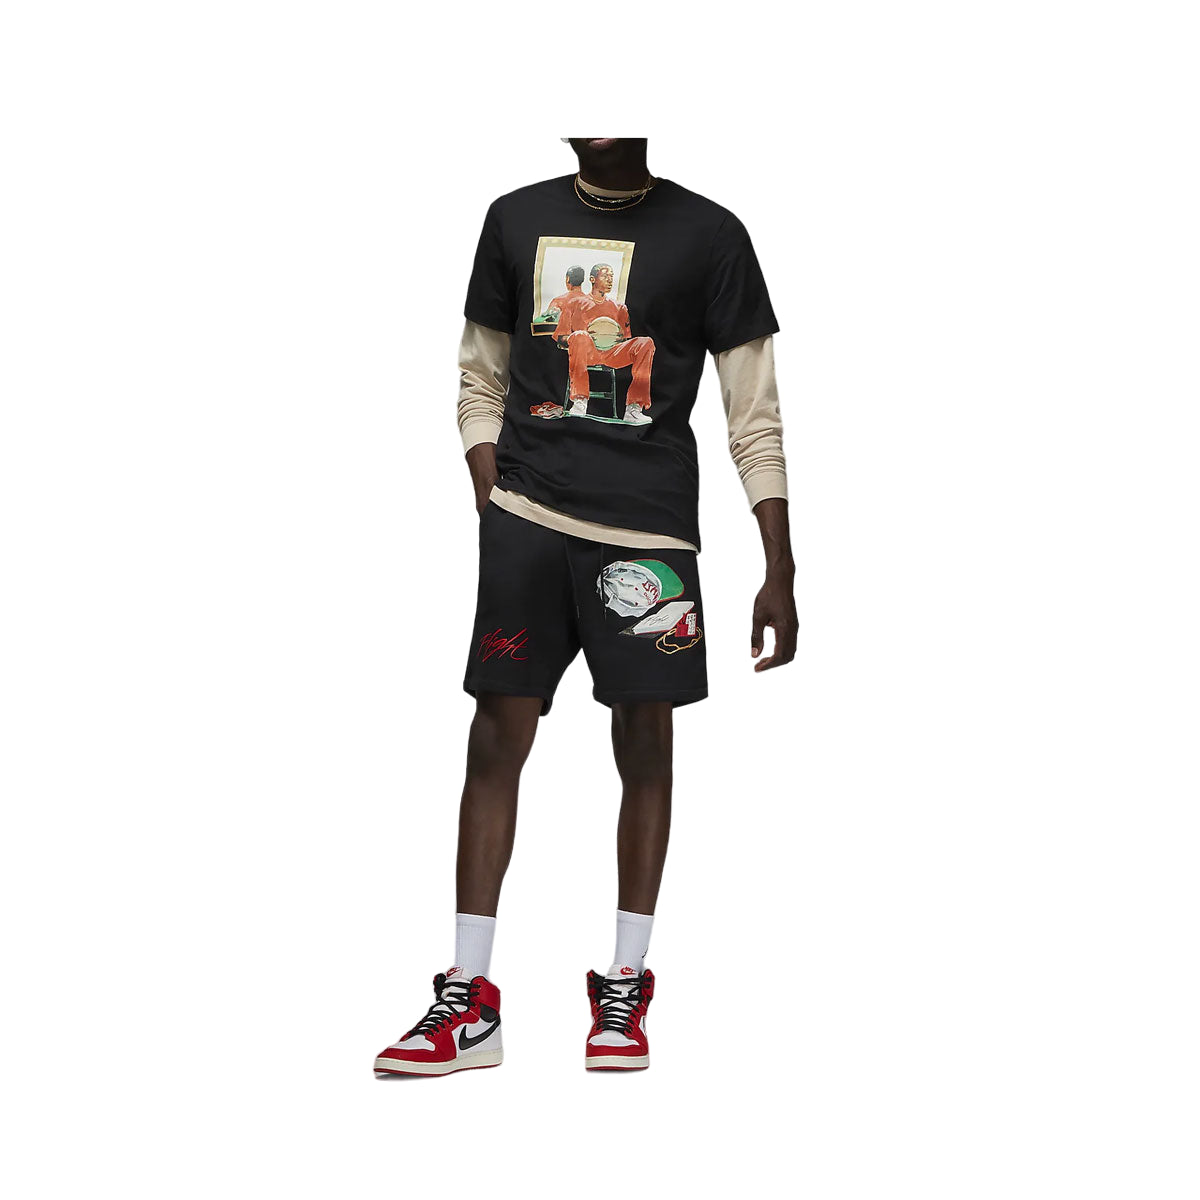 Air Jordan Men's Artist Series by Jacob Rochester Black T-Shirt